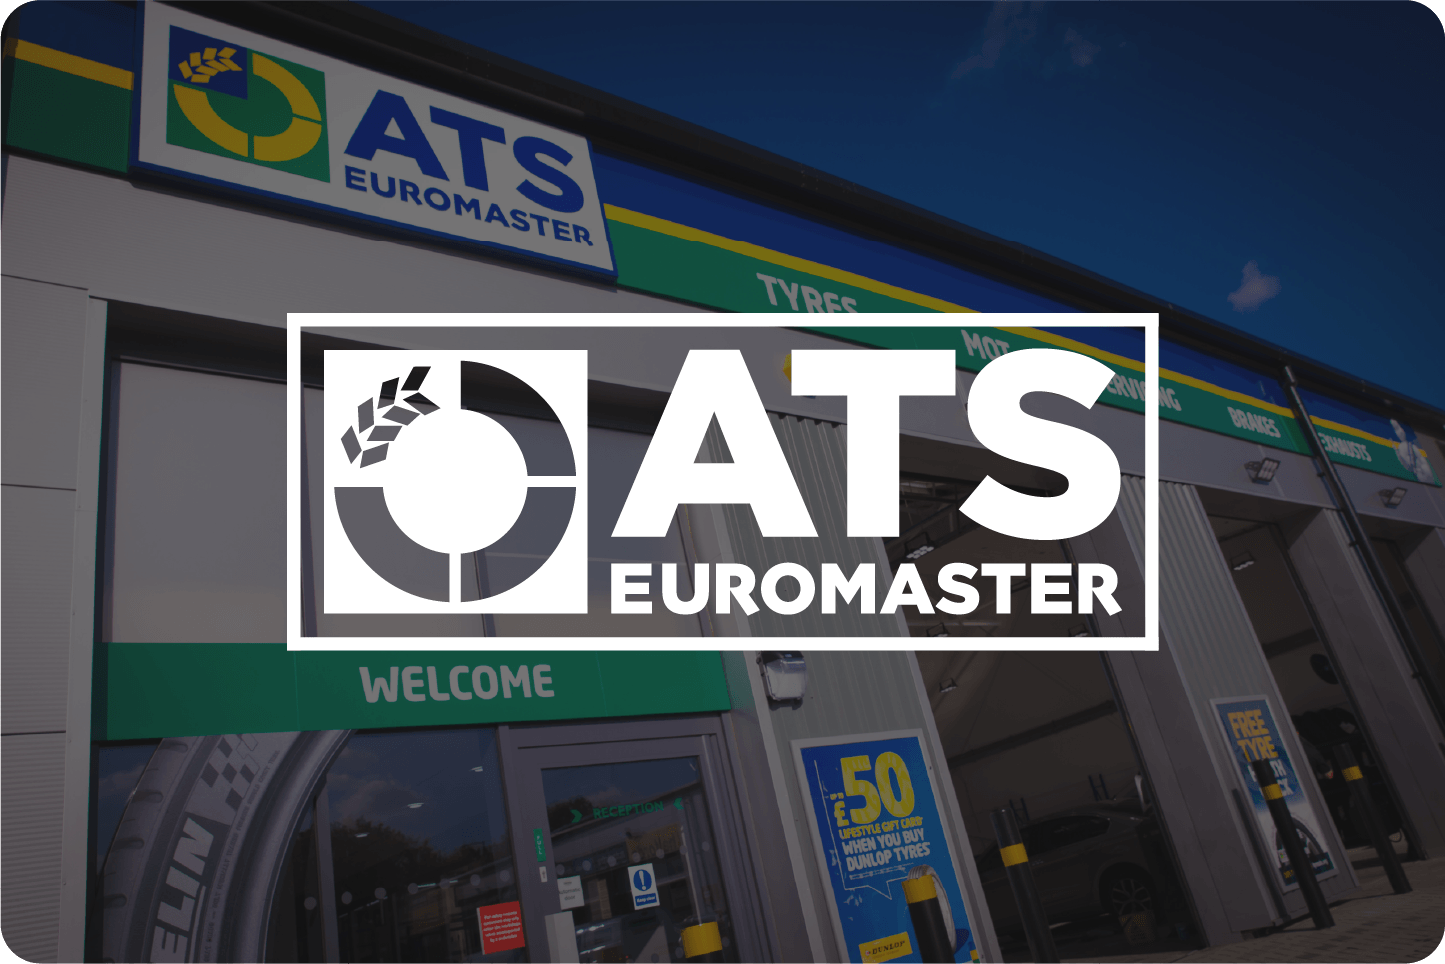 ATS Euromaster Intranet Case Study